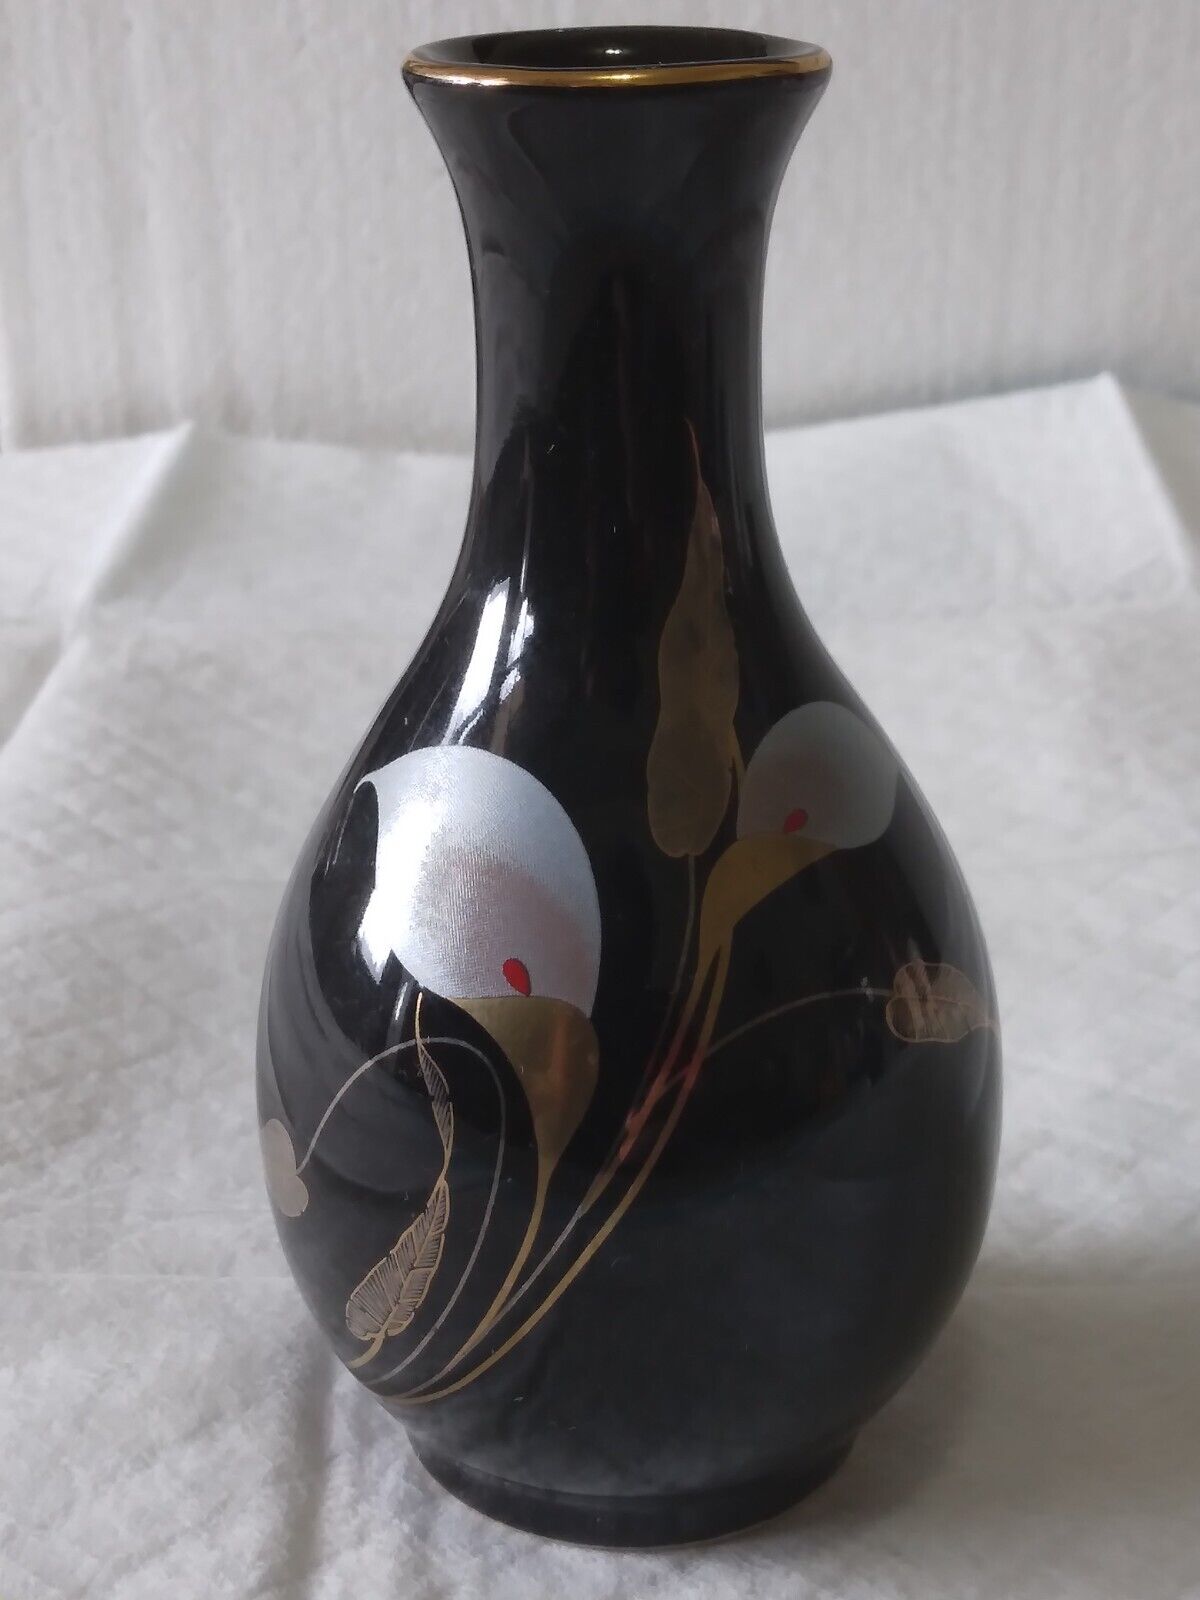 Otagiri Japan Black Glaze Iris Flowers Bud Vase Appx. 4.5 Inch High Home Decor